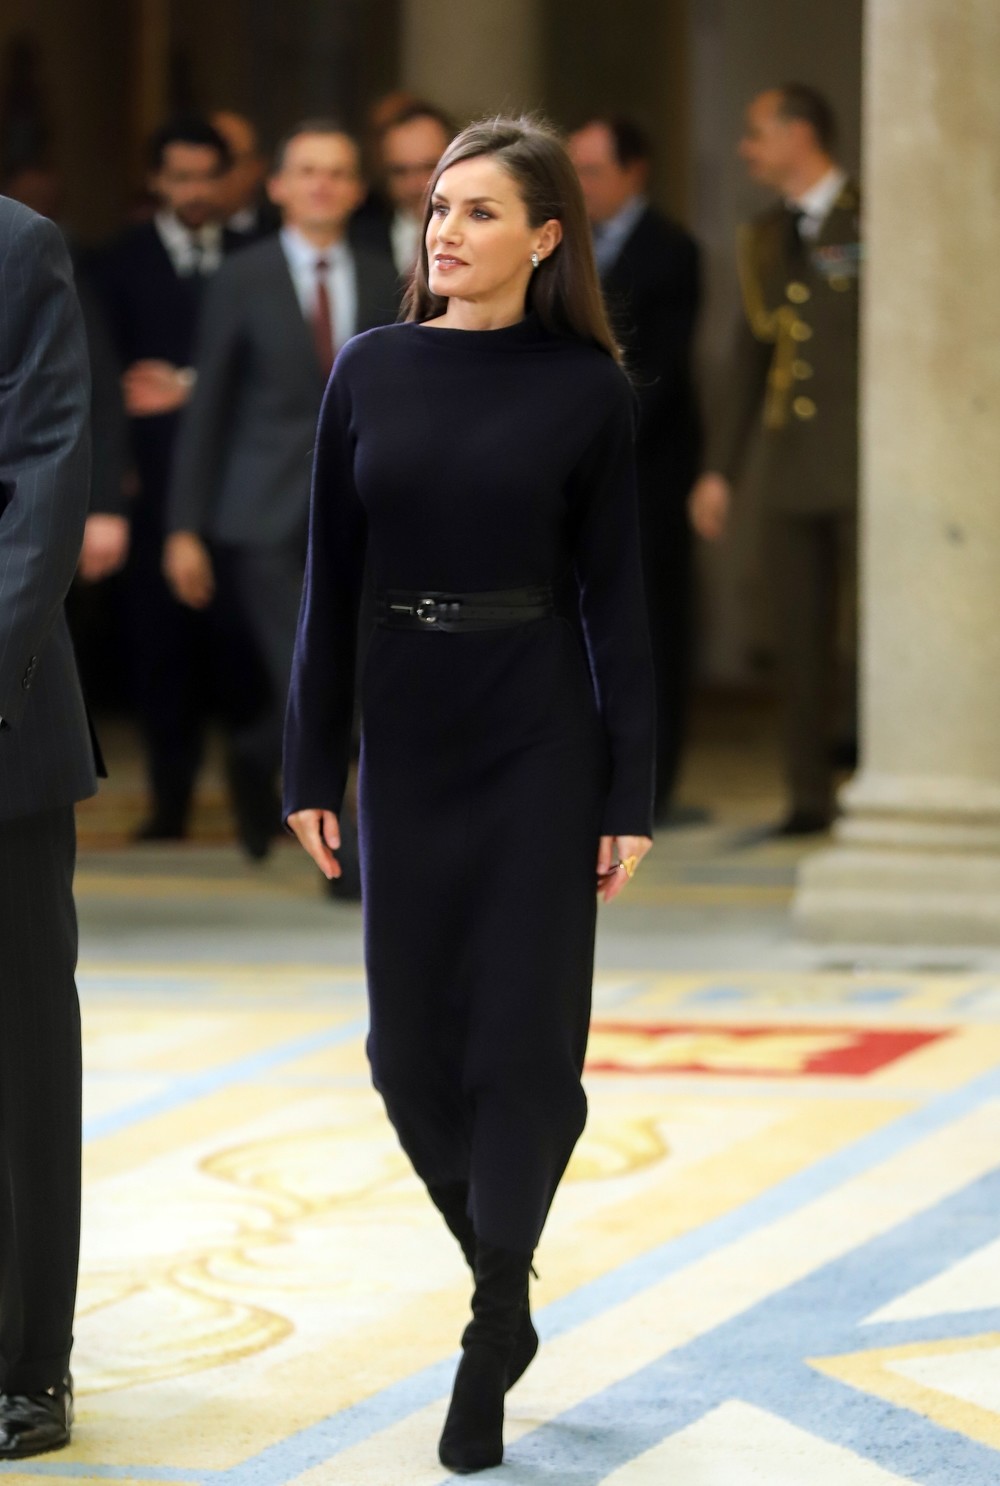 La Reina Letizia deslumbra en color negro
